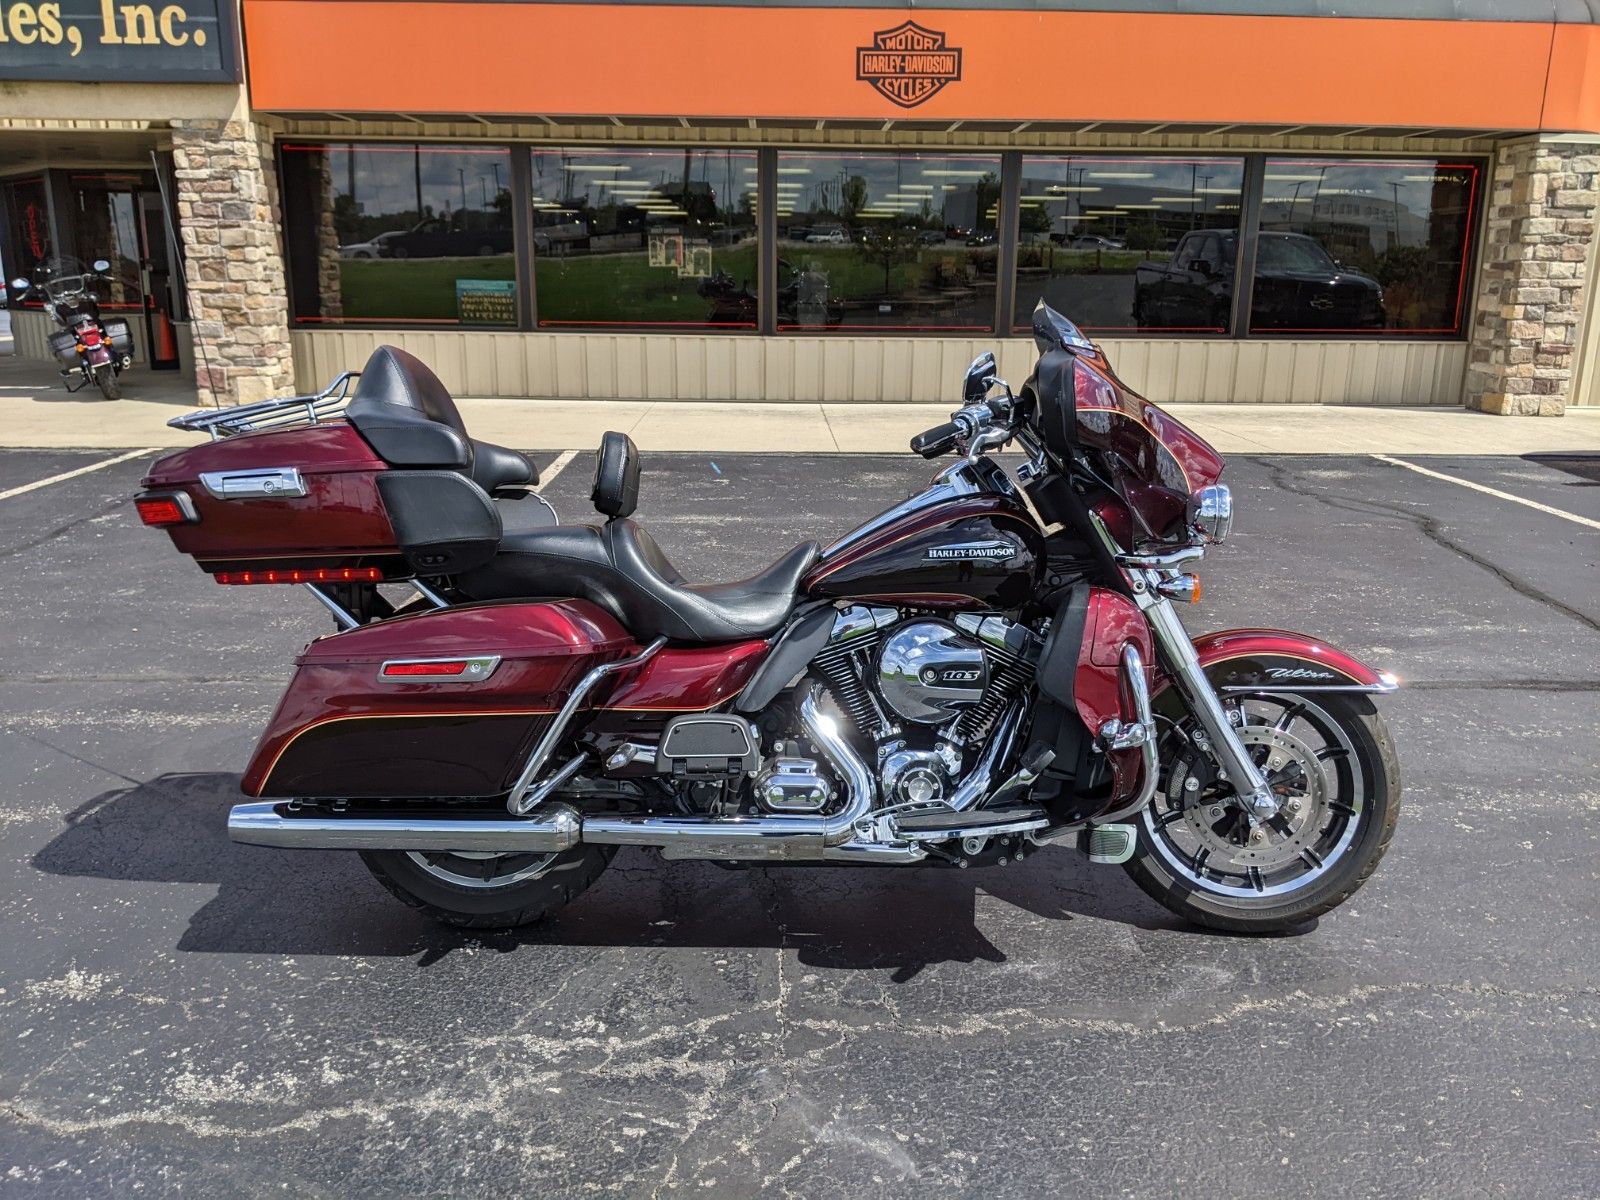 2014 Harley-Davidson Electra Glide® Ultra Classic® in Muncie, Indiana - Photo 1